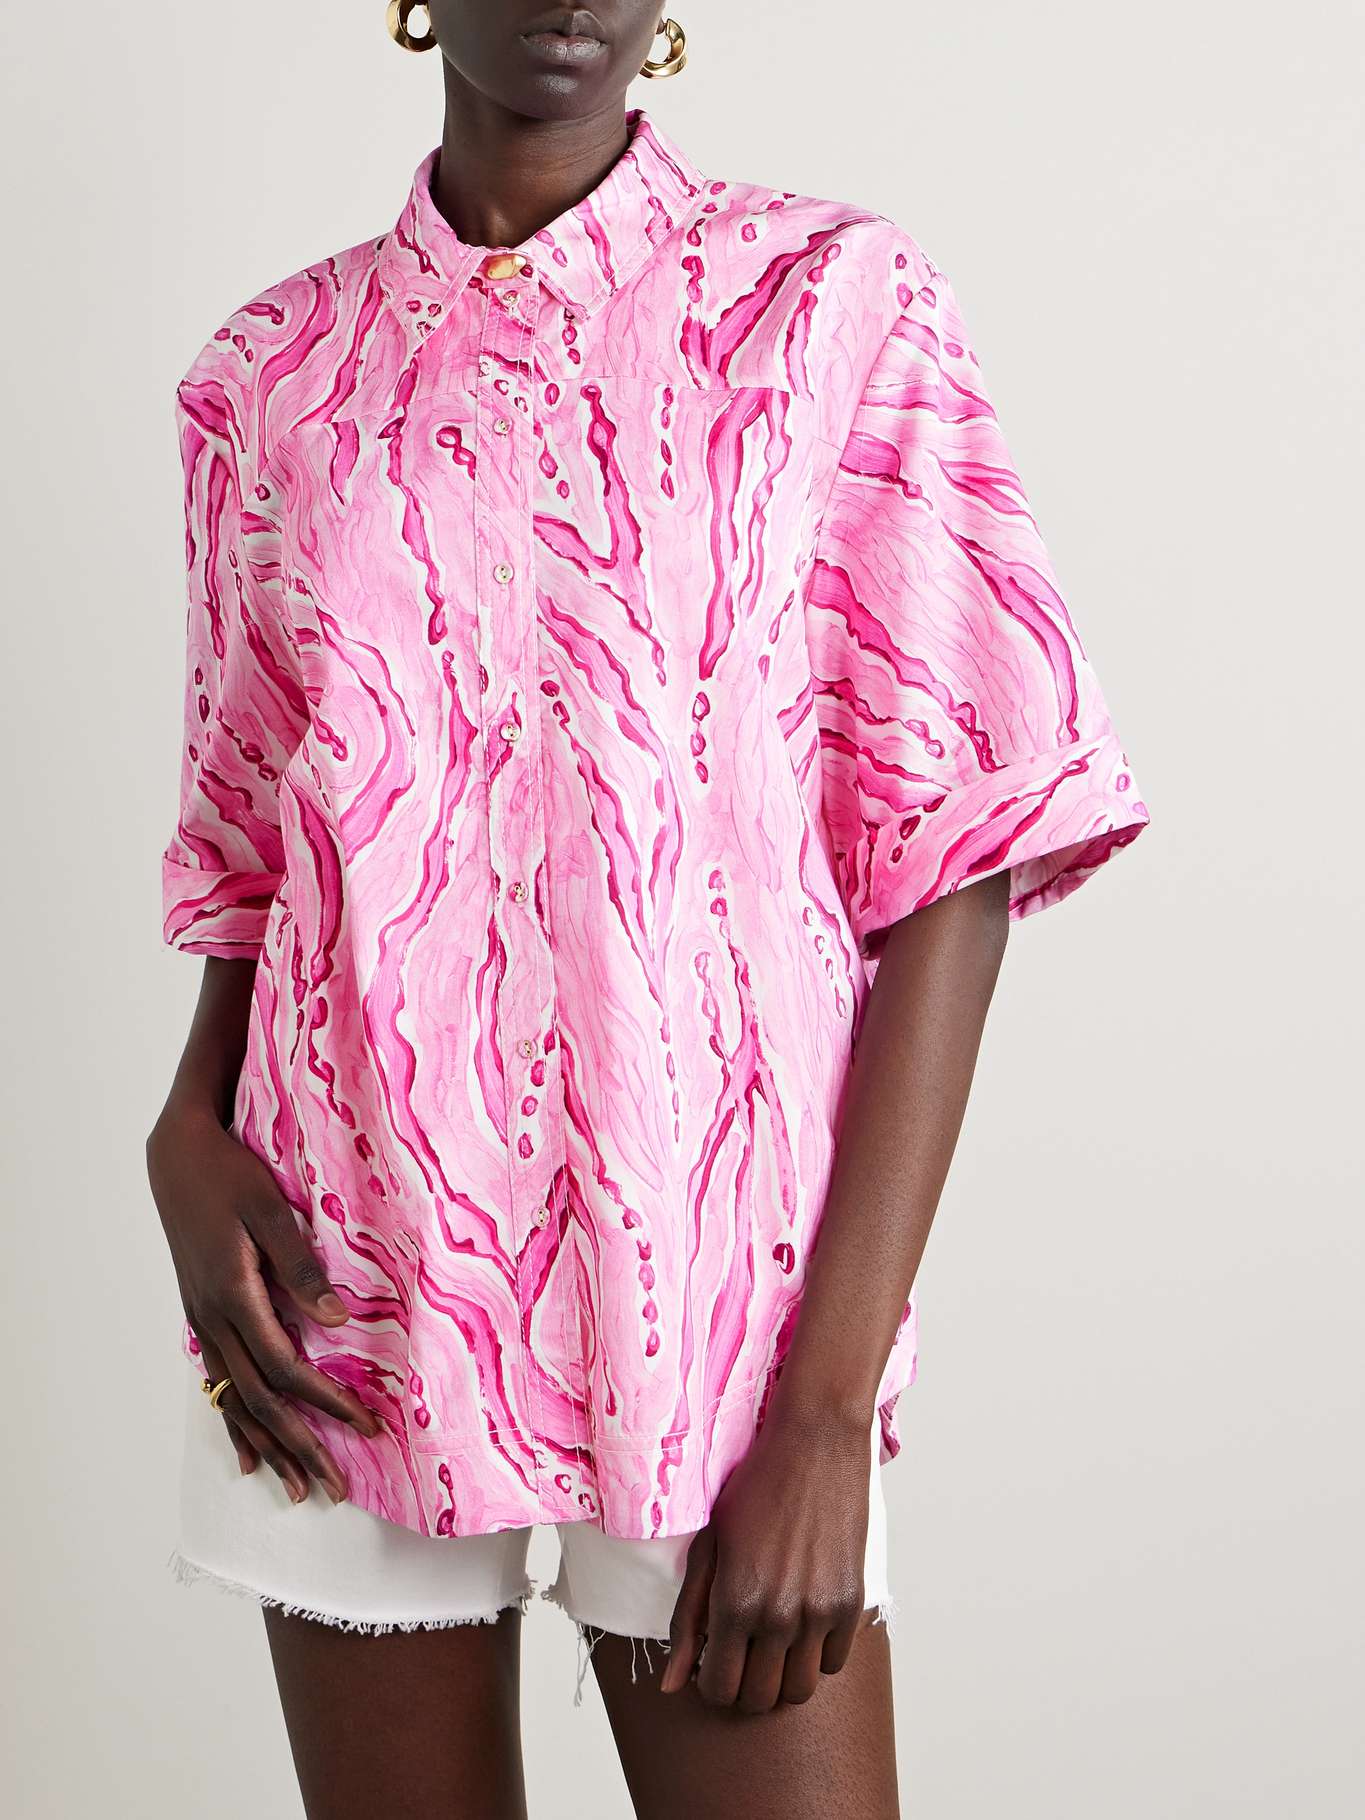 AJ Blaze Stitch Oversized Cotton Shirt in Dappled Flame Pink